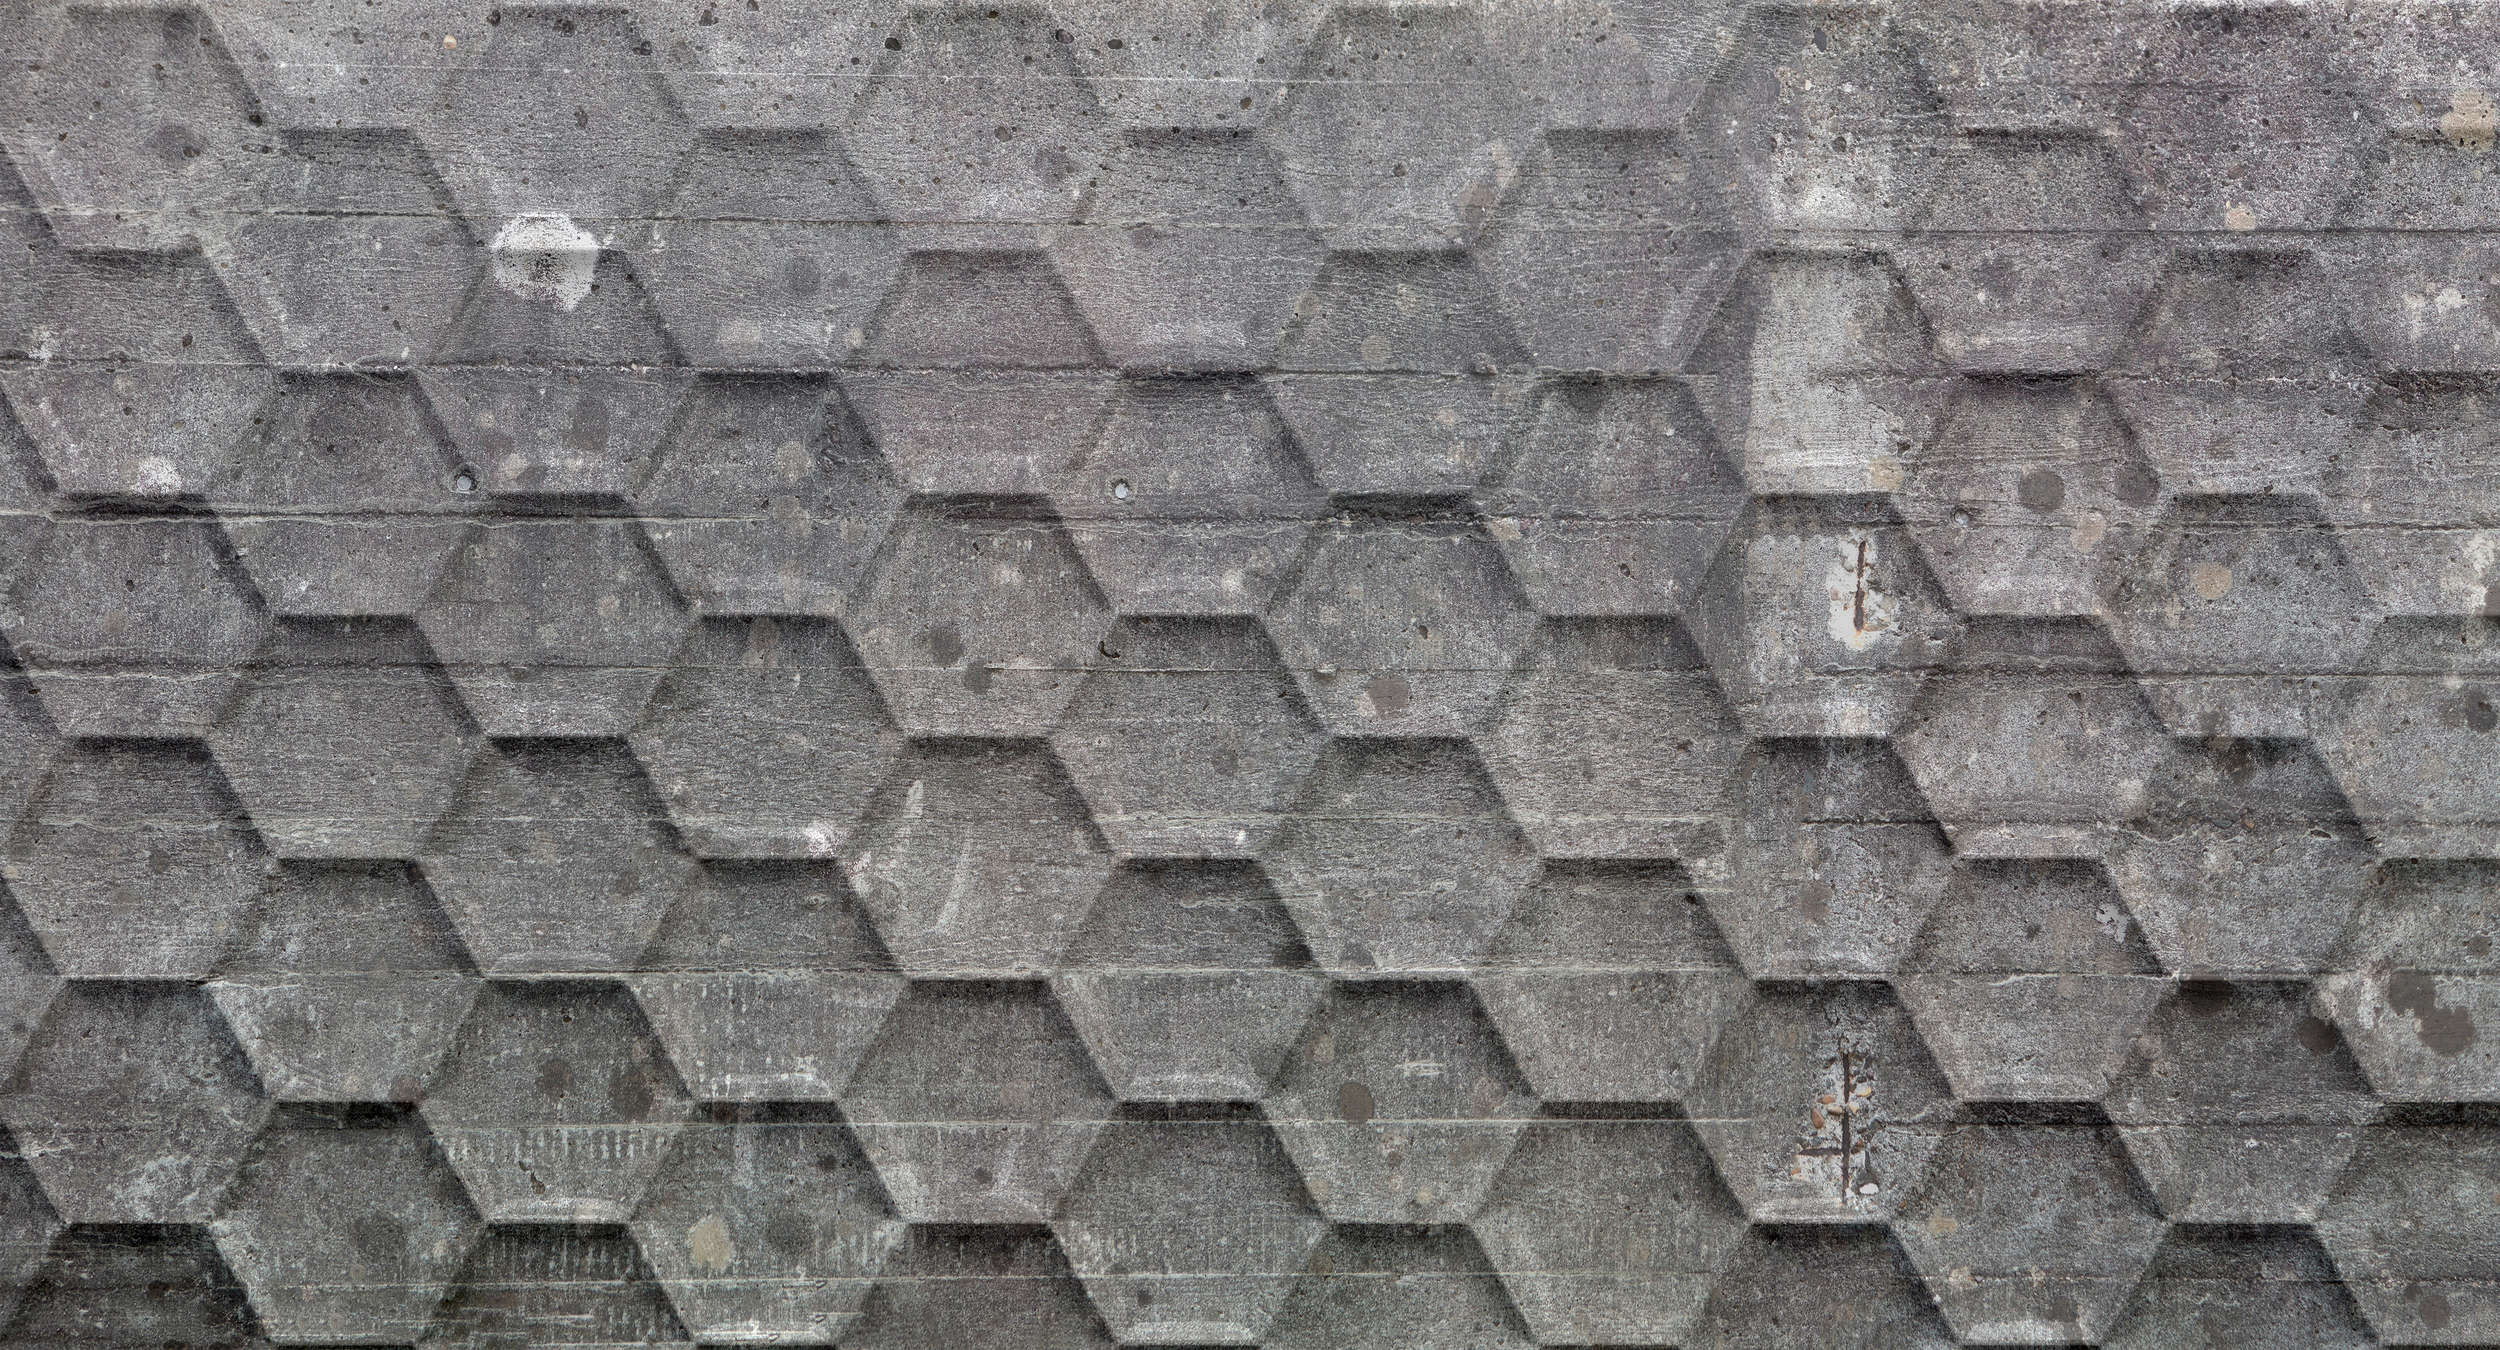             Fototapeten Beton rustikal mit Waben-Muster – Grau, Weiß
        